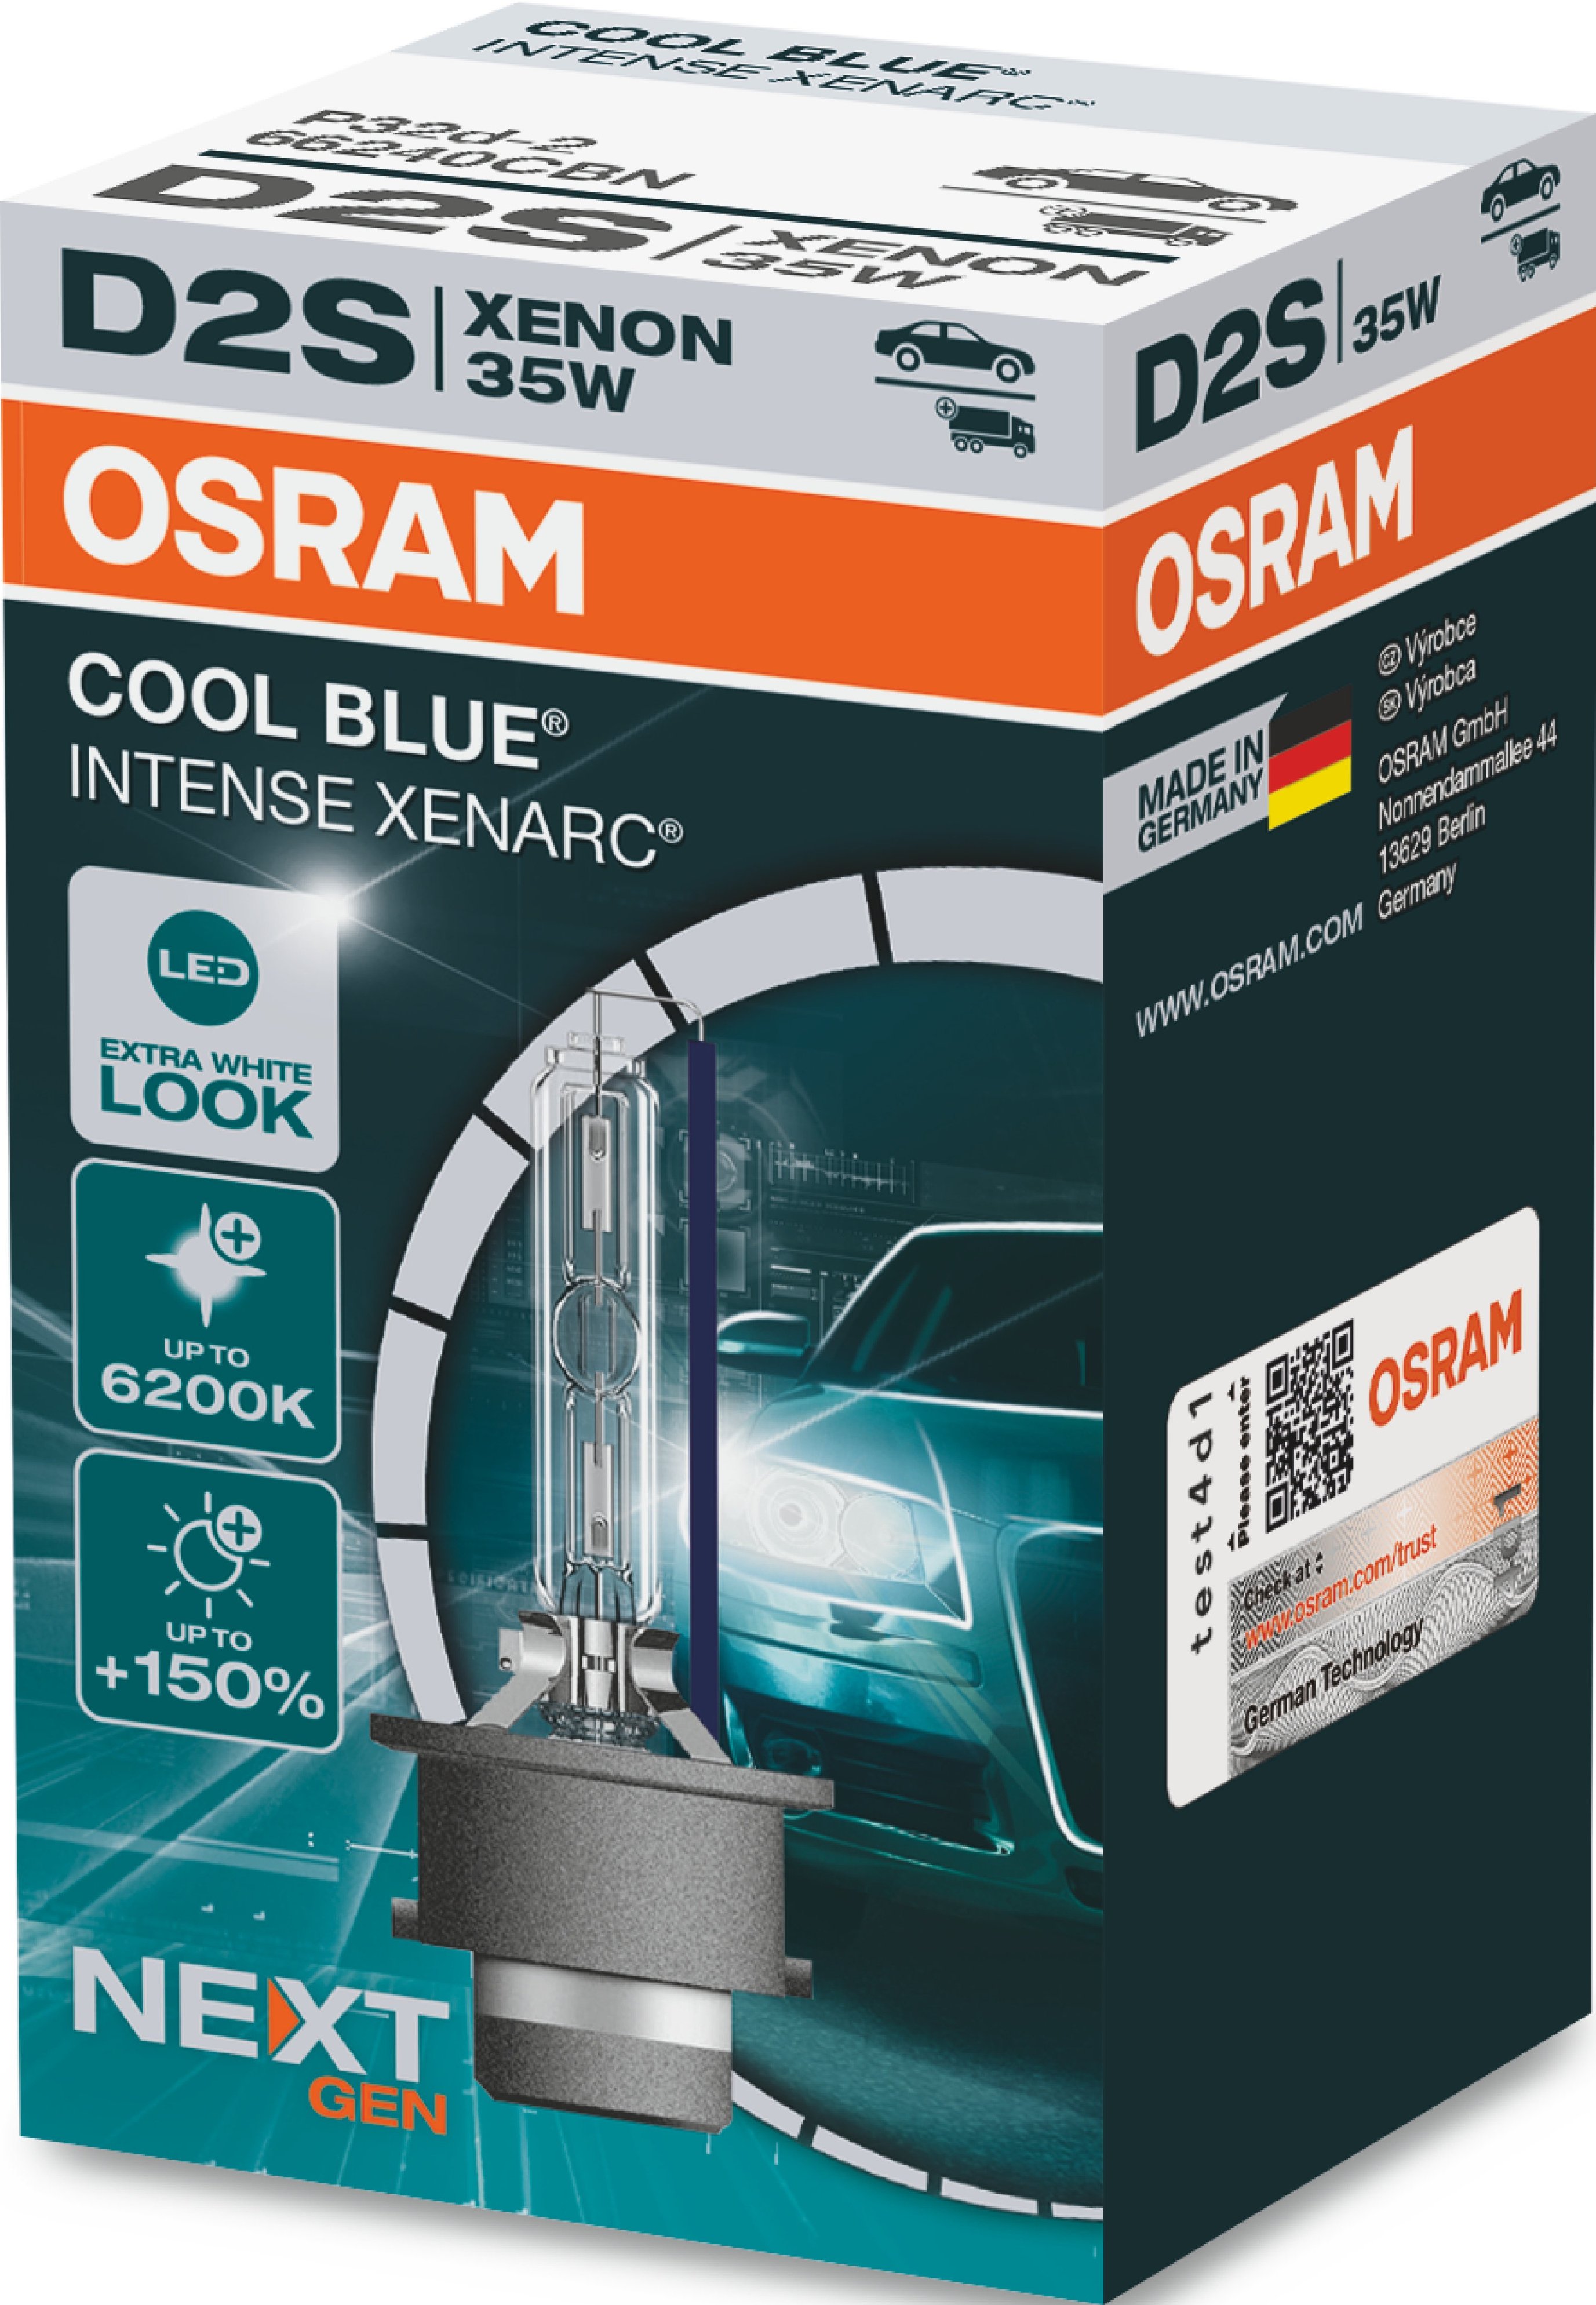 Лампа Osram ксеноновая 85V D2S 35W P32D-2 xenarc Cool Blue Intense, Duobox (2шт) (OS_66240_CBI-HCB) фото 2